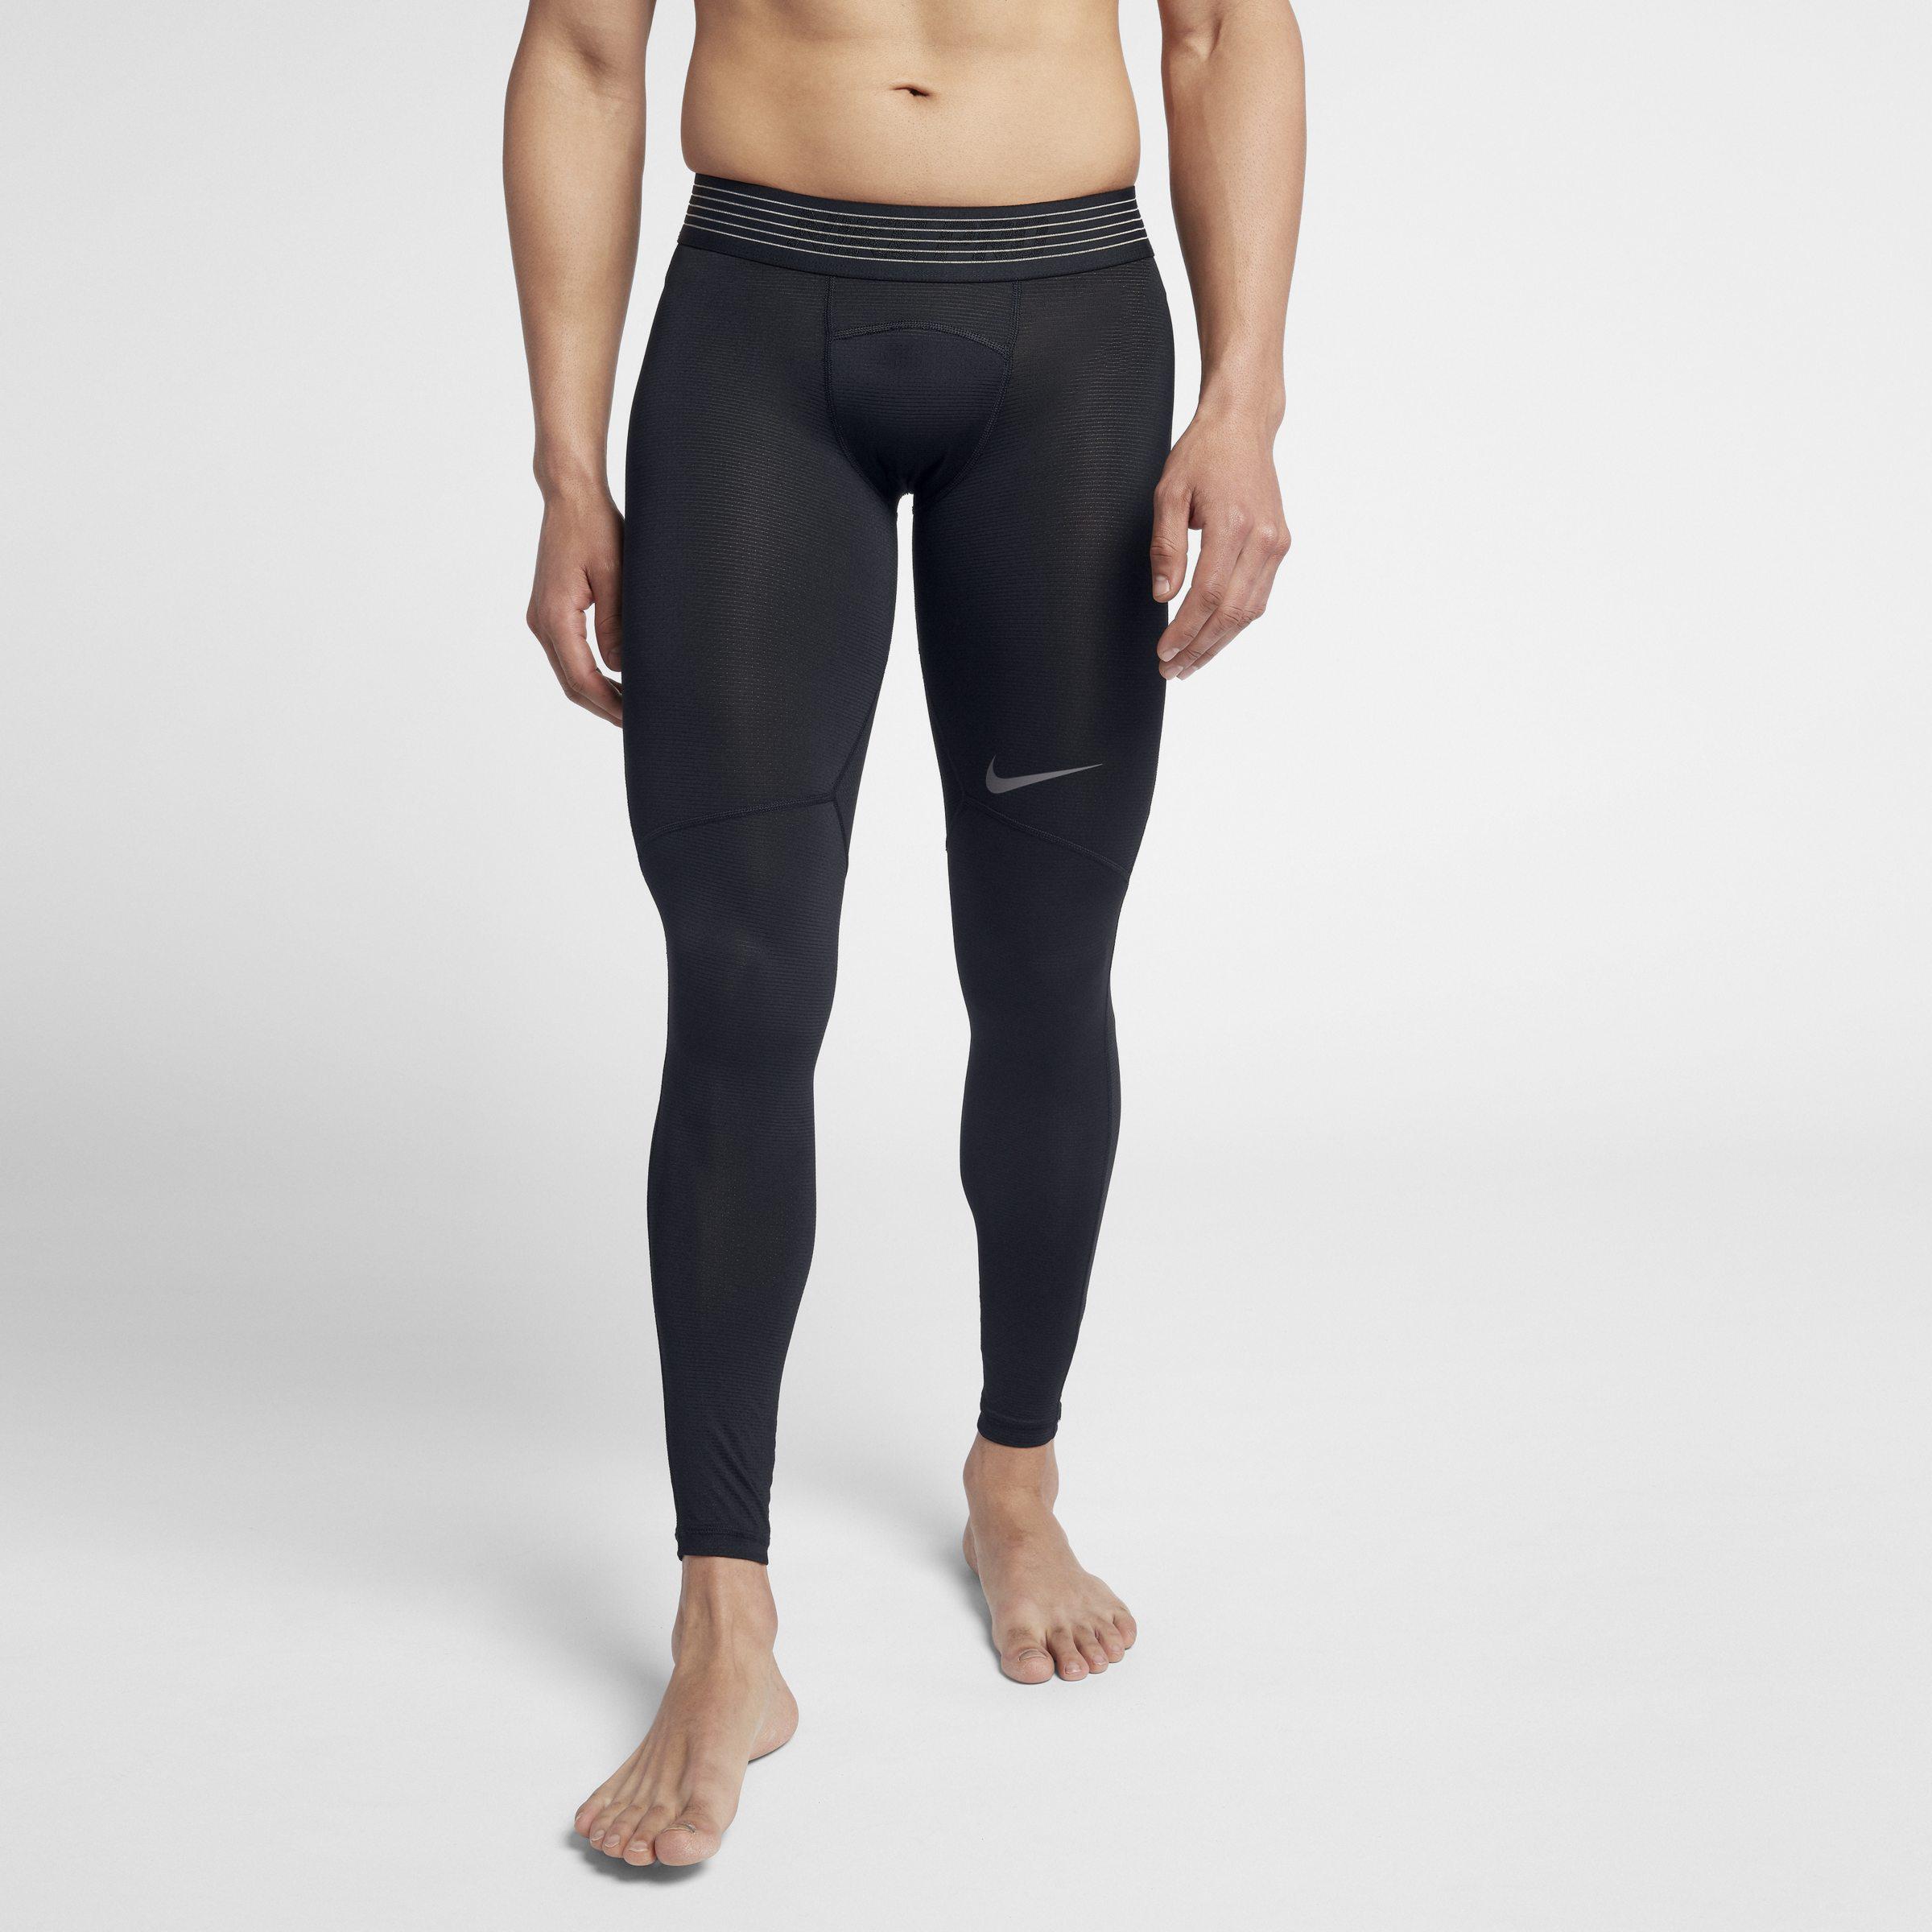 Nike Pro Hypercool Training Tights in Black for Men - Lyst